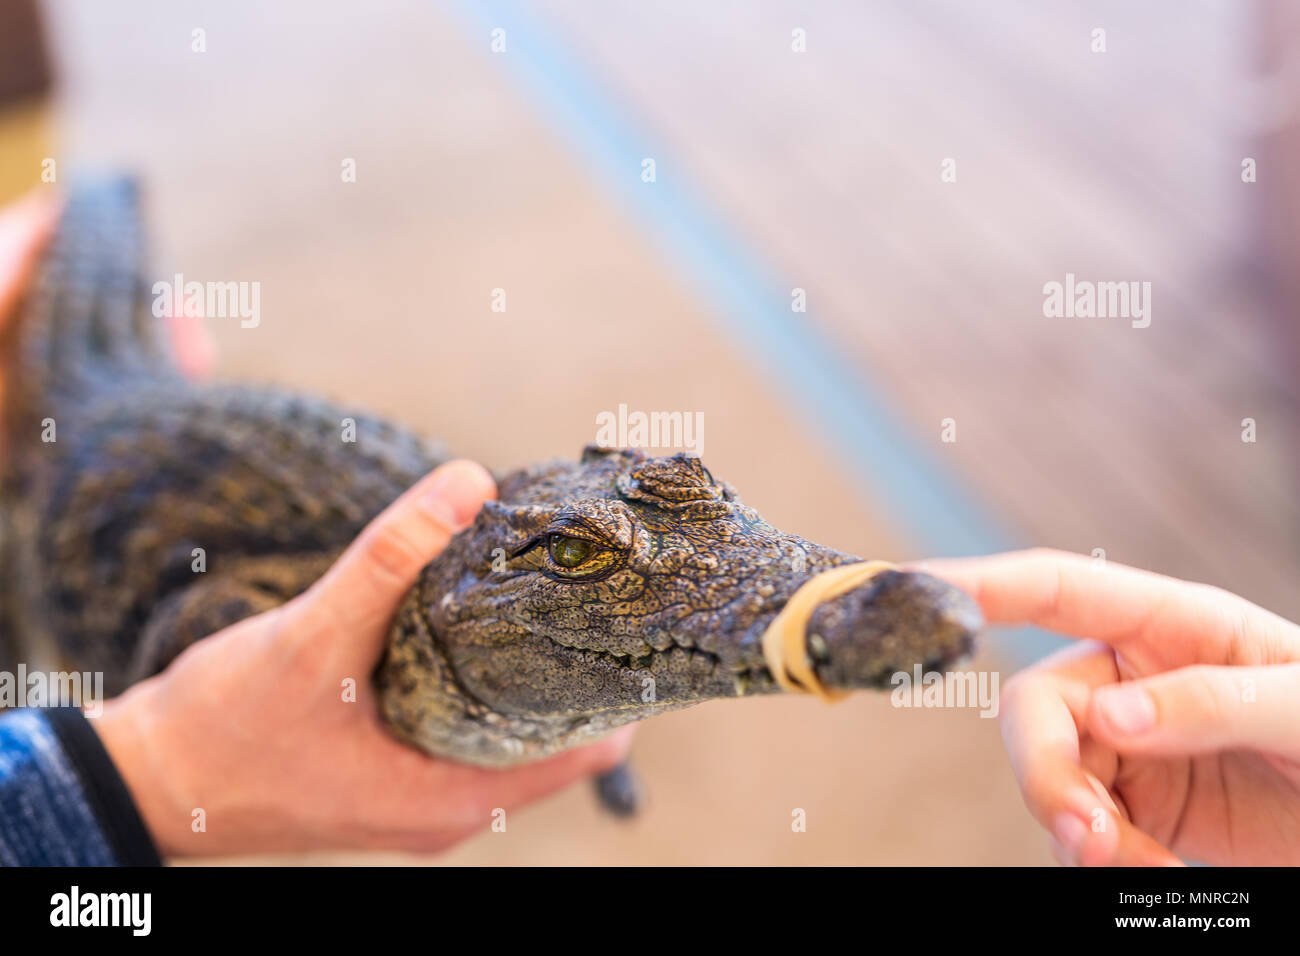 Child touching baby Nile crocodile while father holding it. Stock Photo